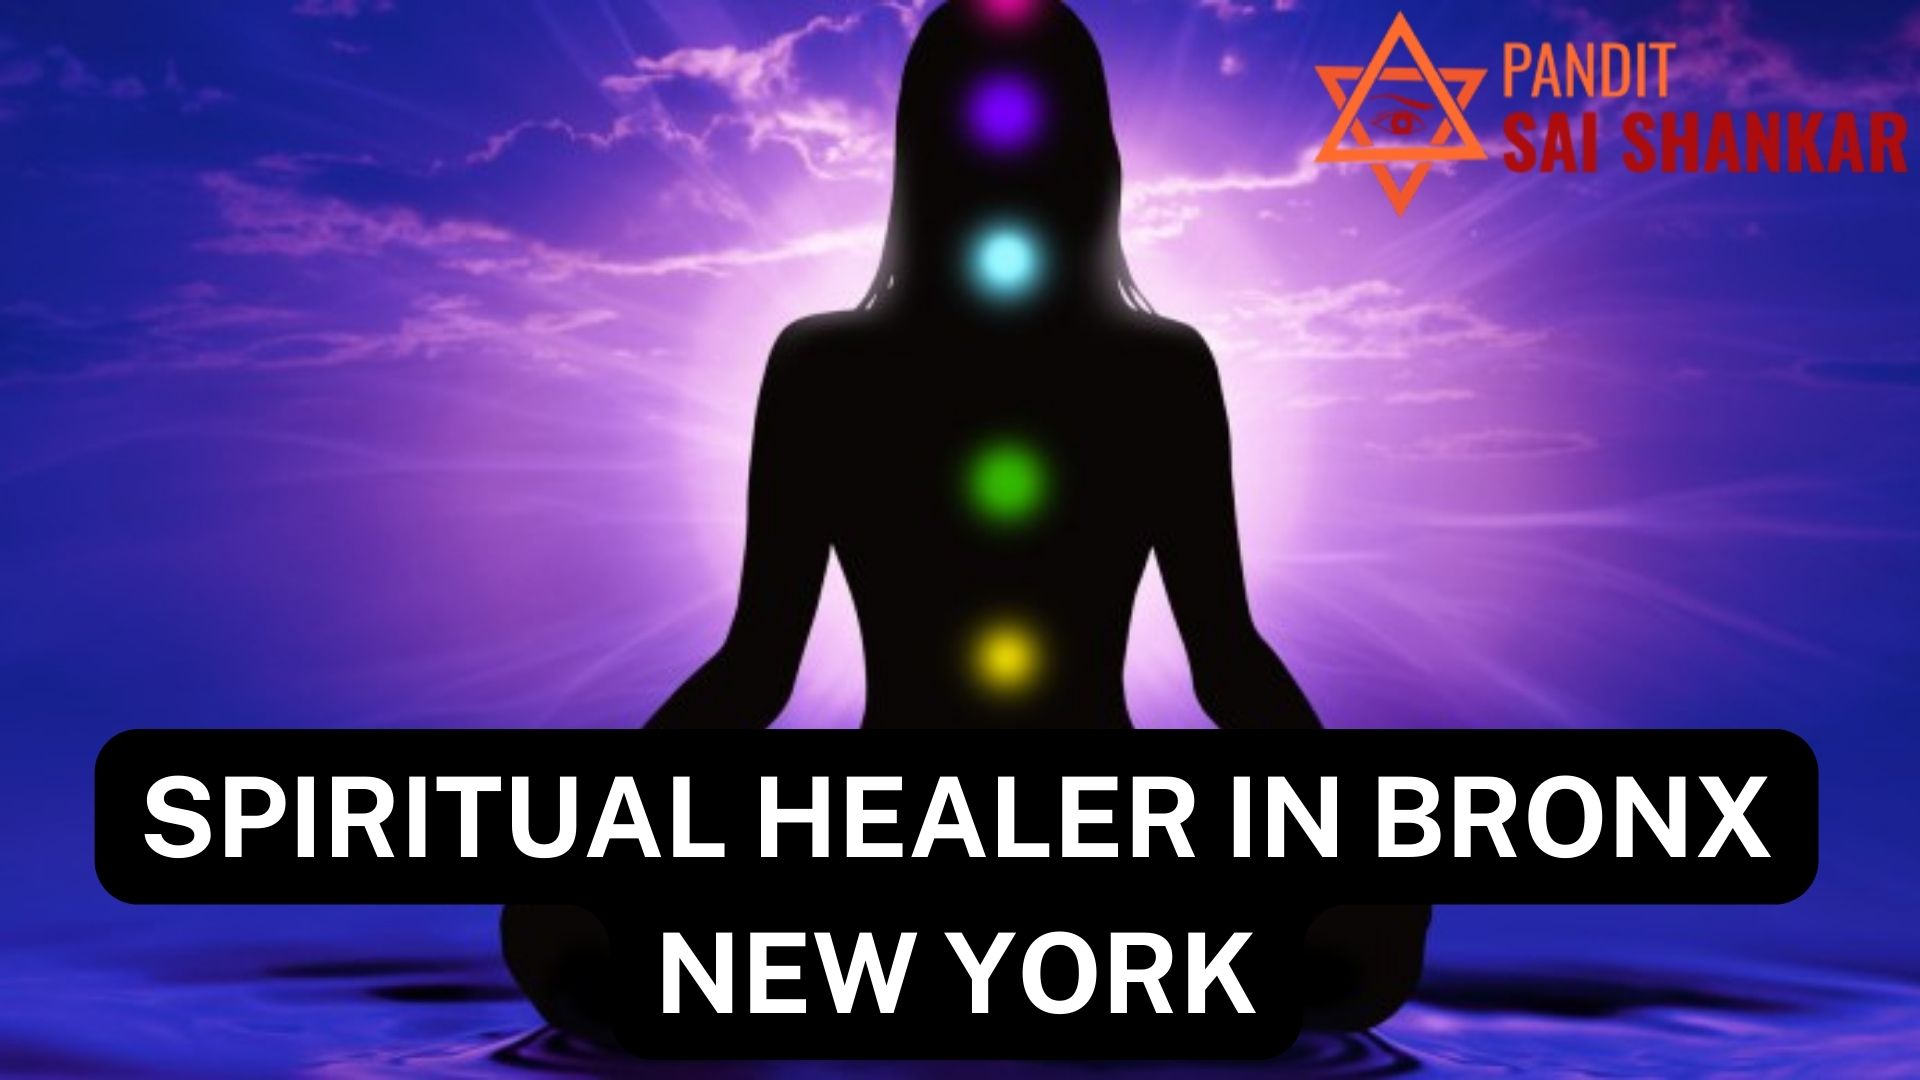 Best Famous Spiritual Healer in Bronx New York